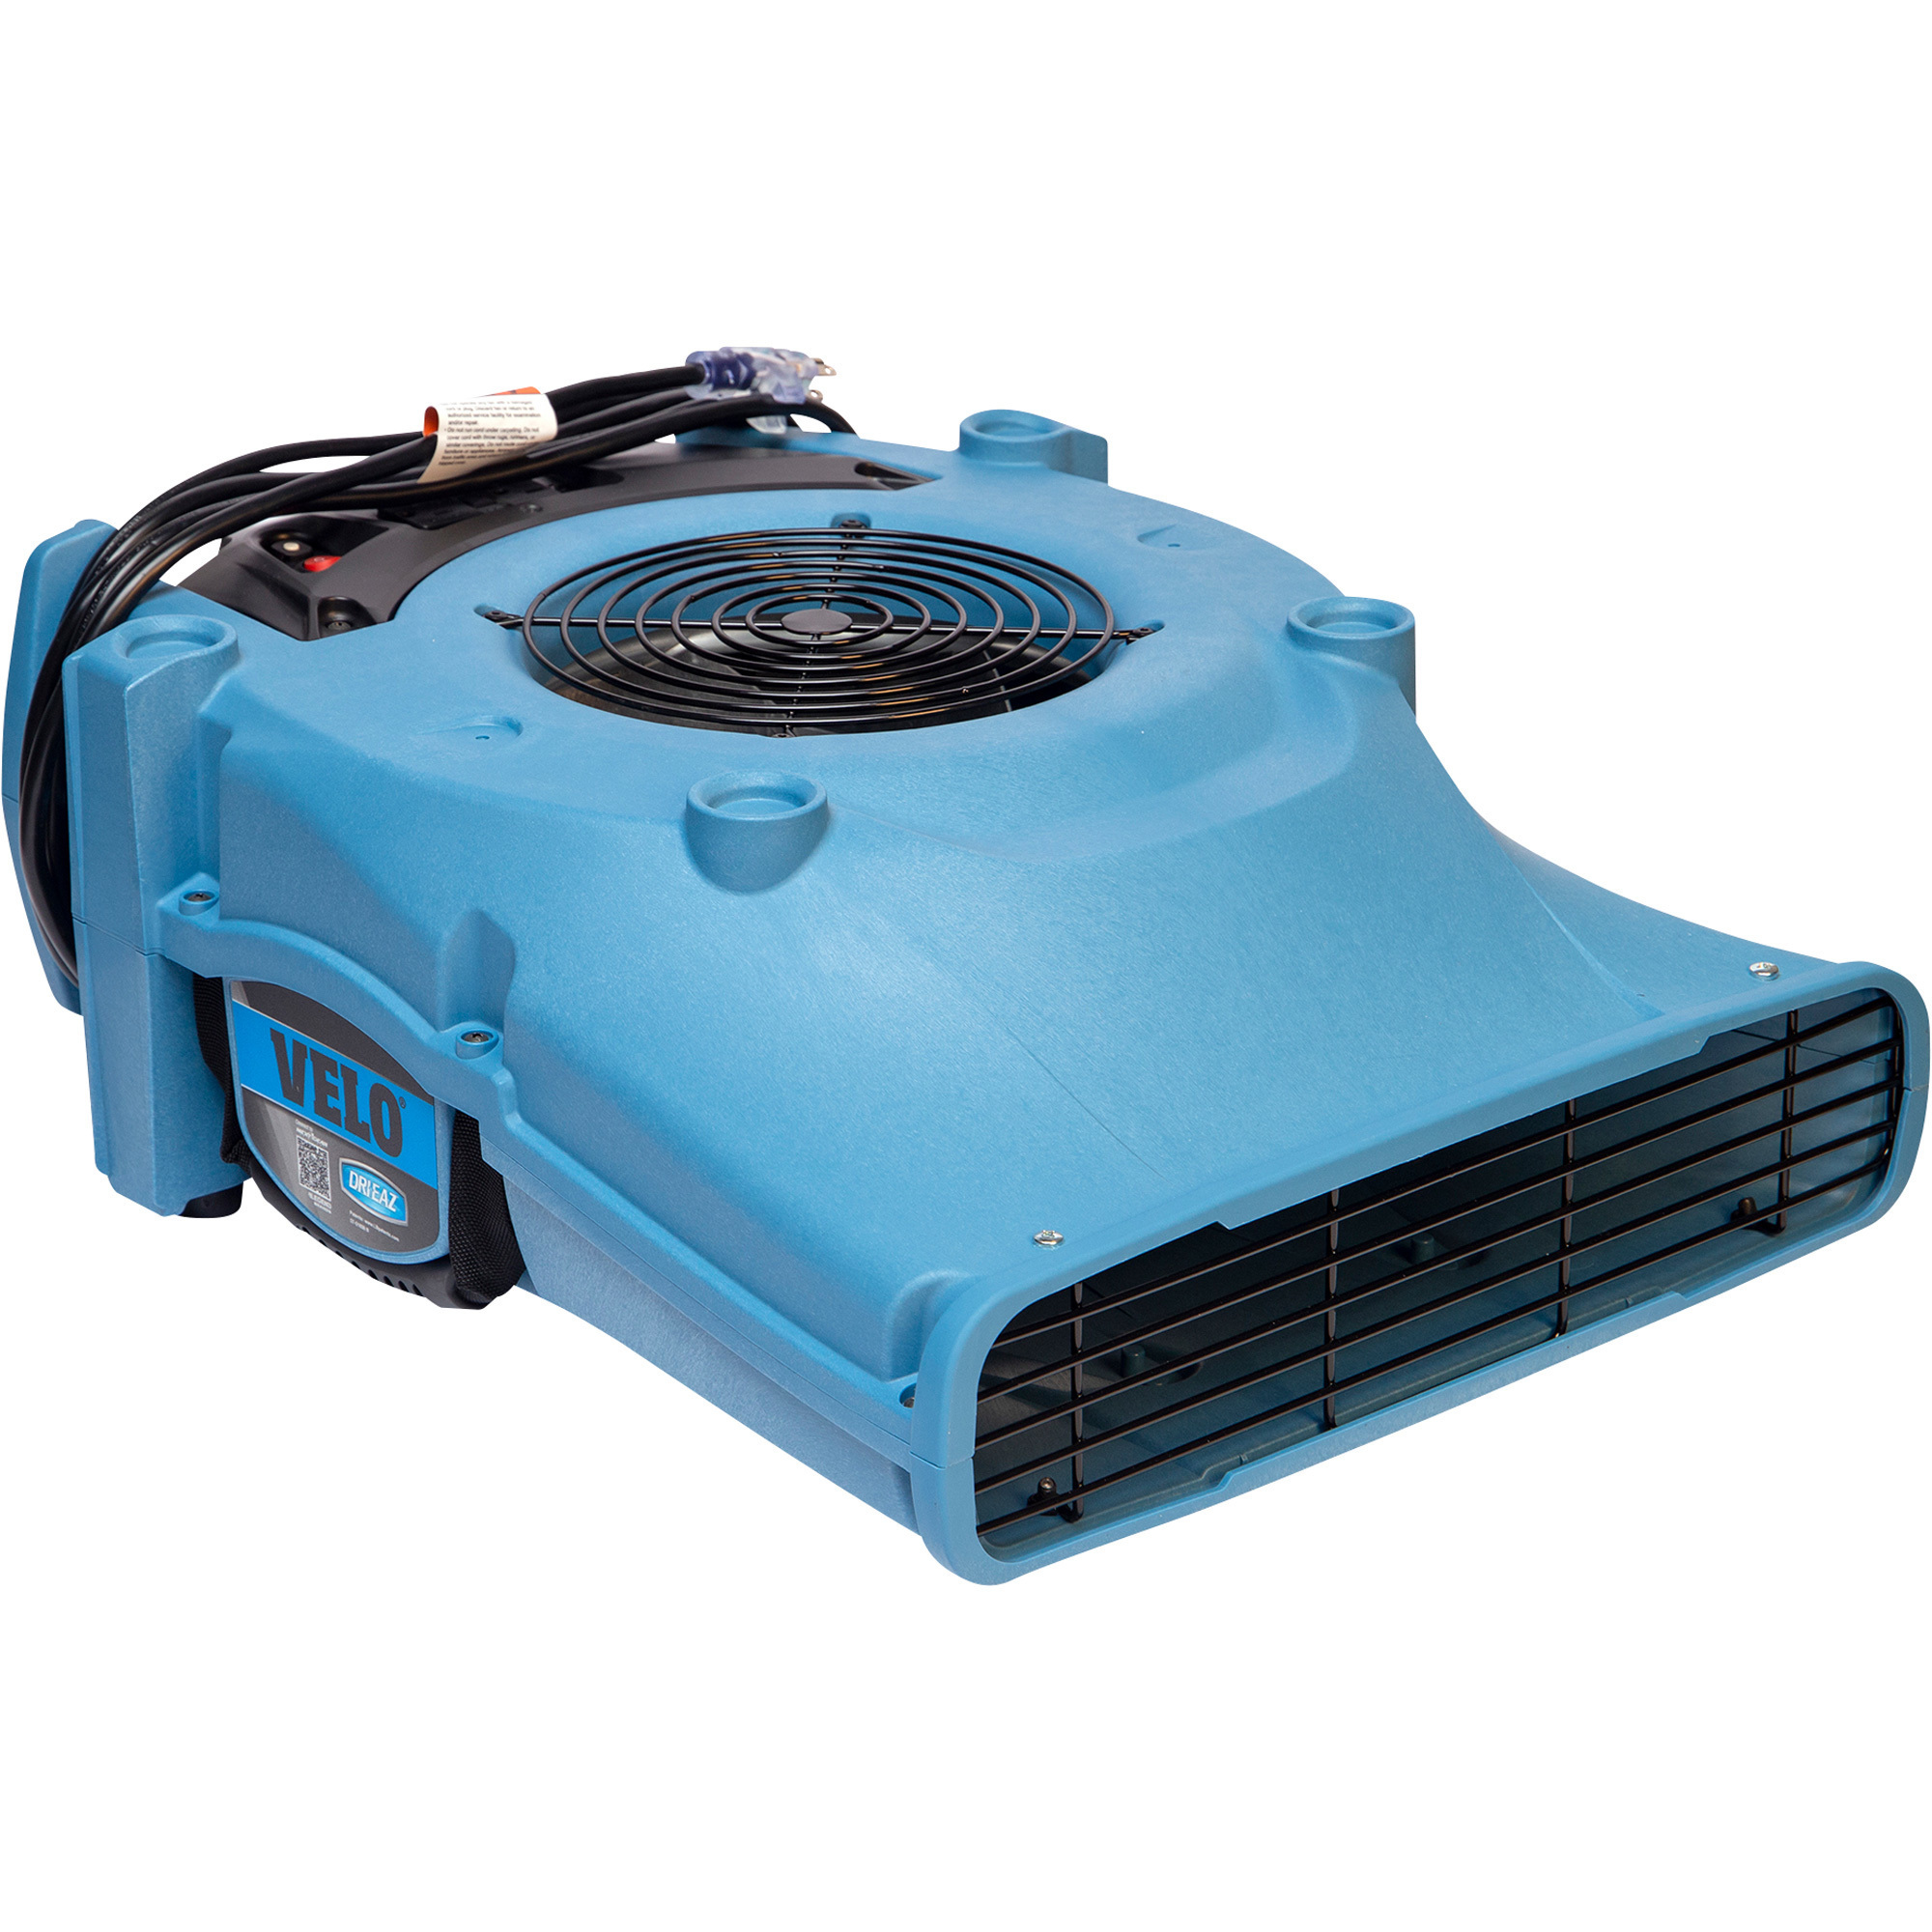 Dri-Eaz Velo Low Profile Air Mover, Xactimate Code: WTRDRY, 885 CFM, Model F504